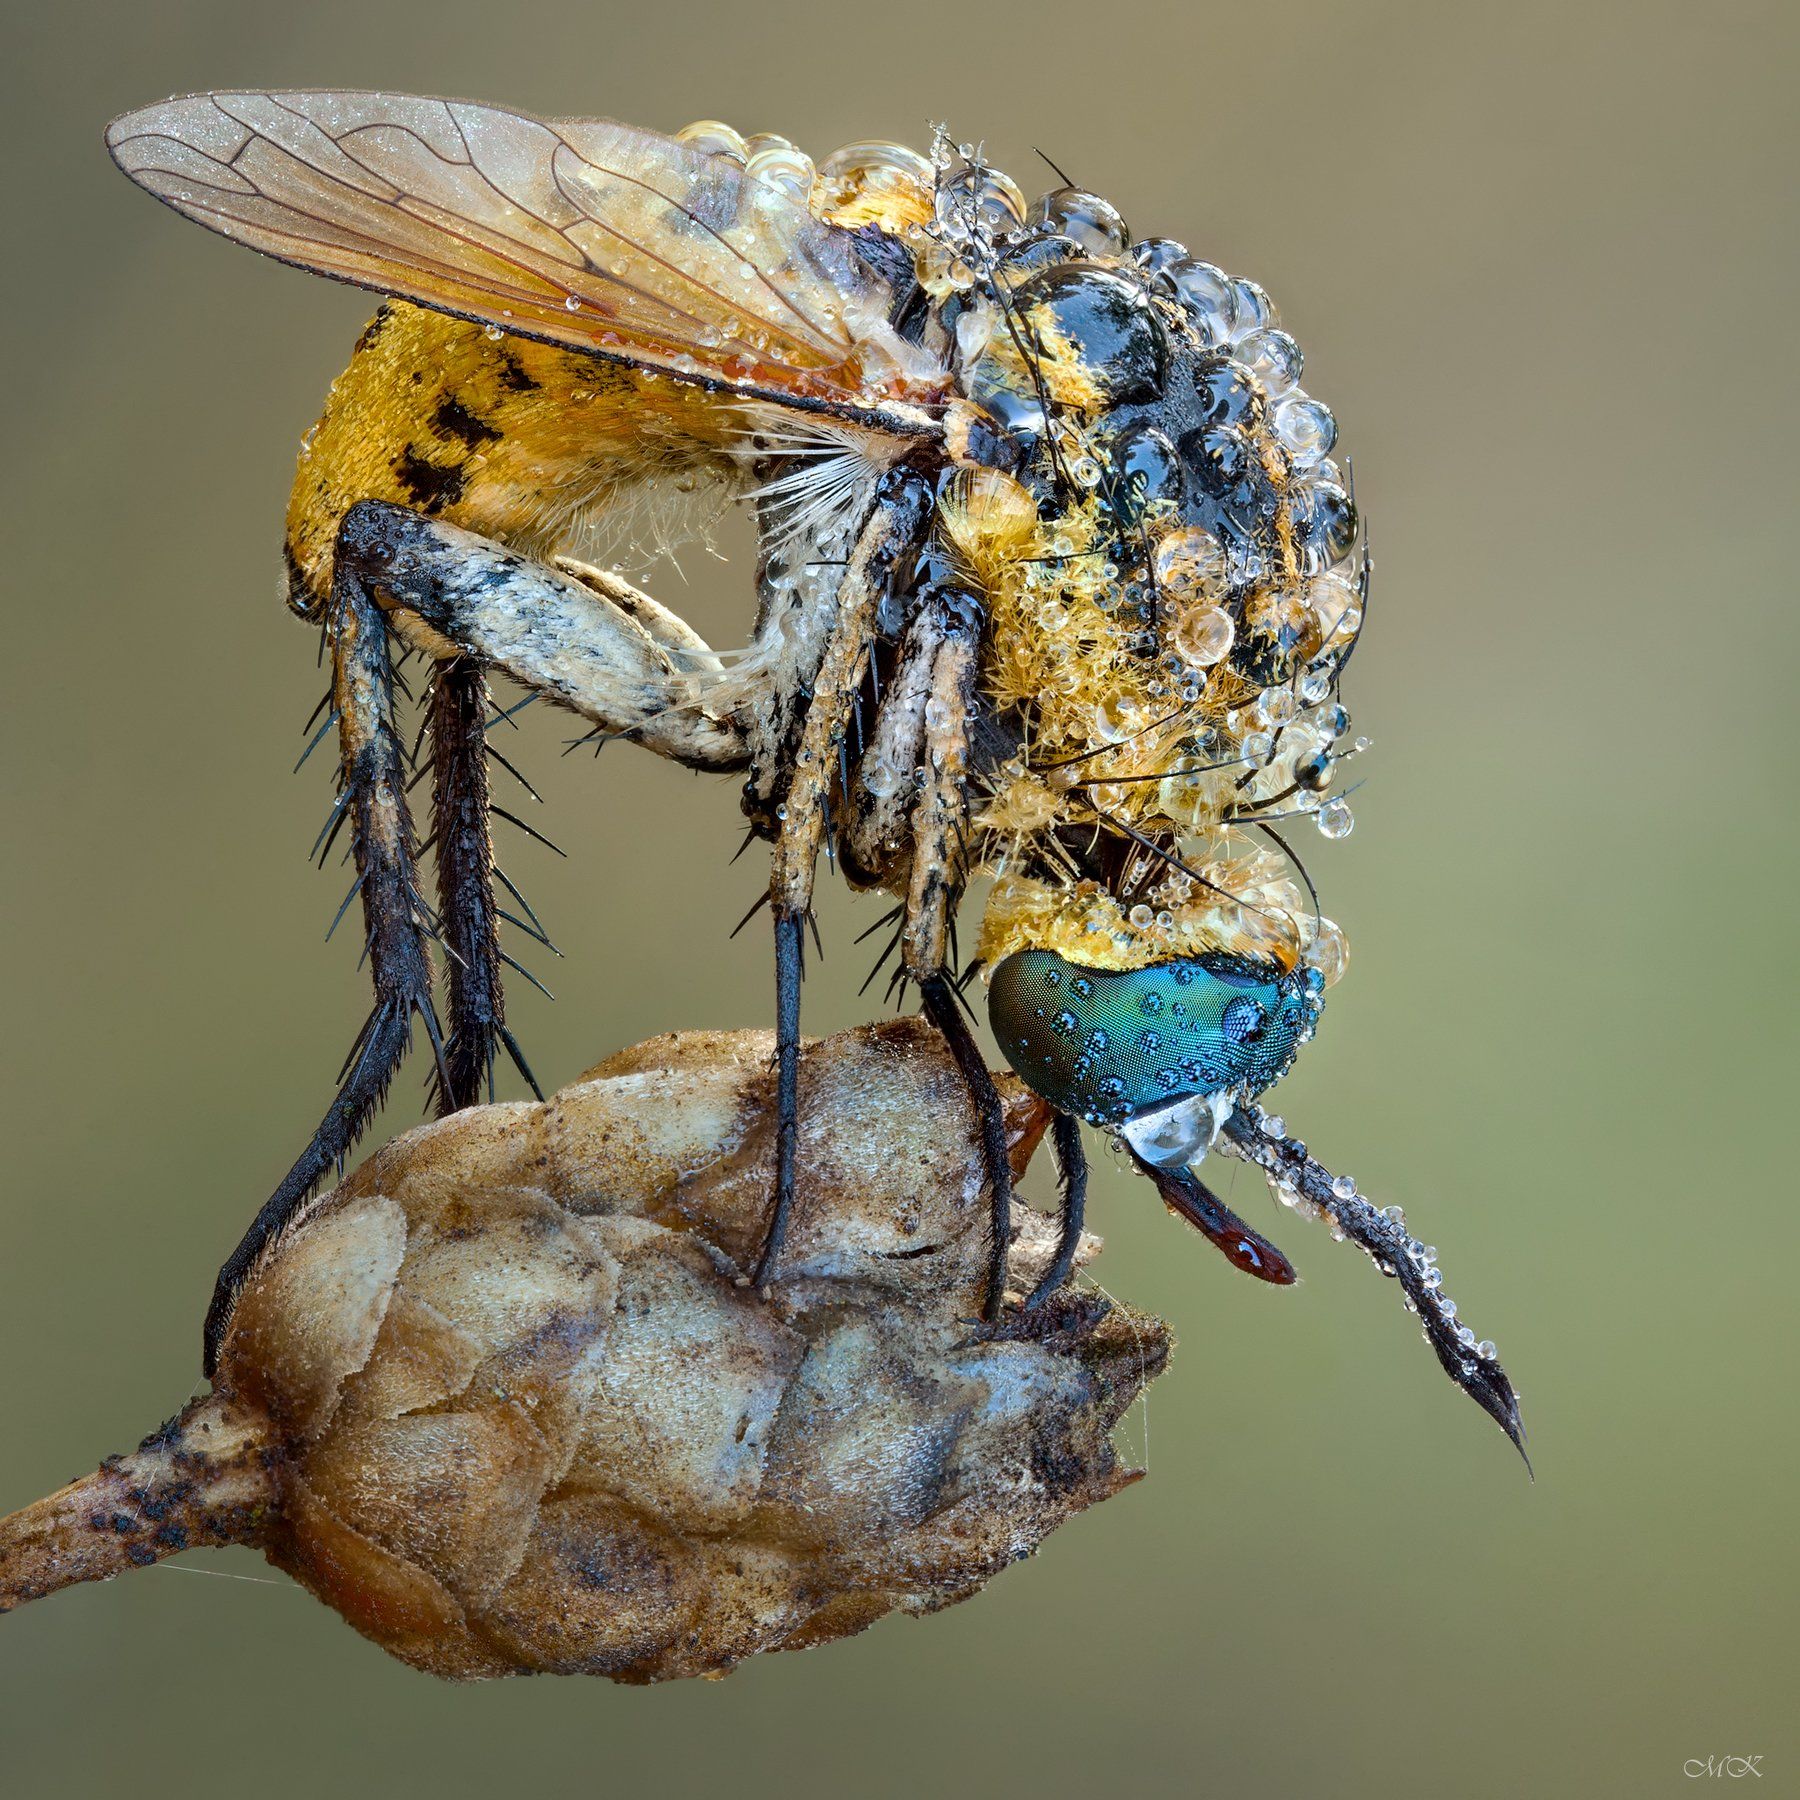 bombyliidae, bee fly, toxophora fasciculata, Miron Karlinsky